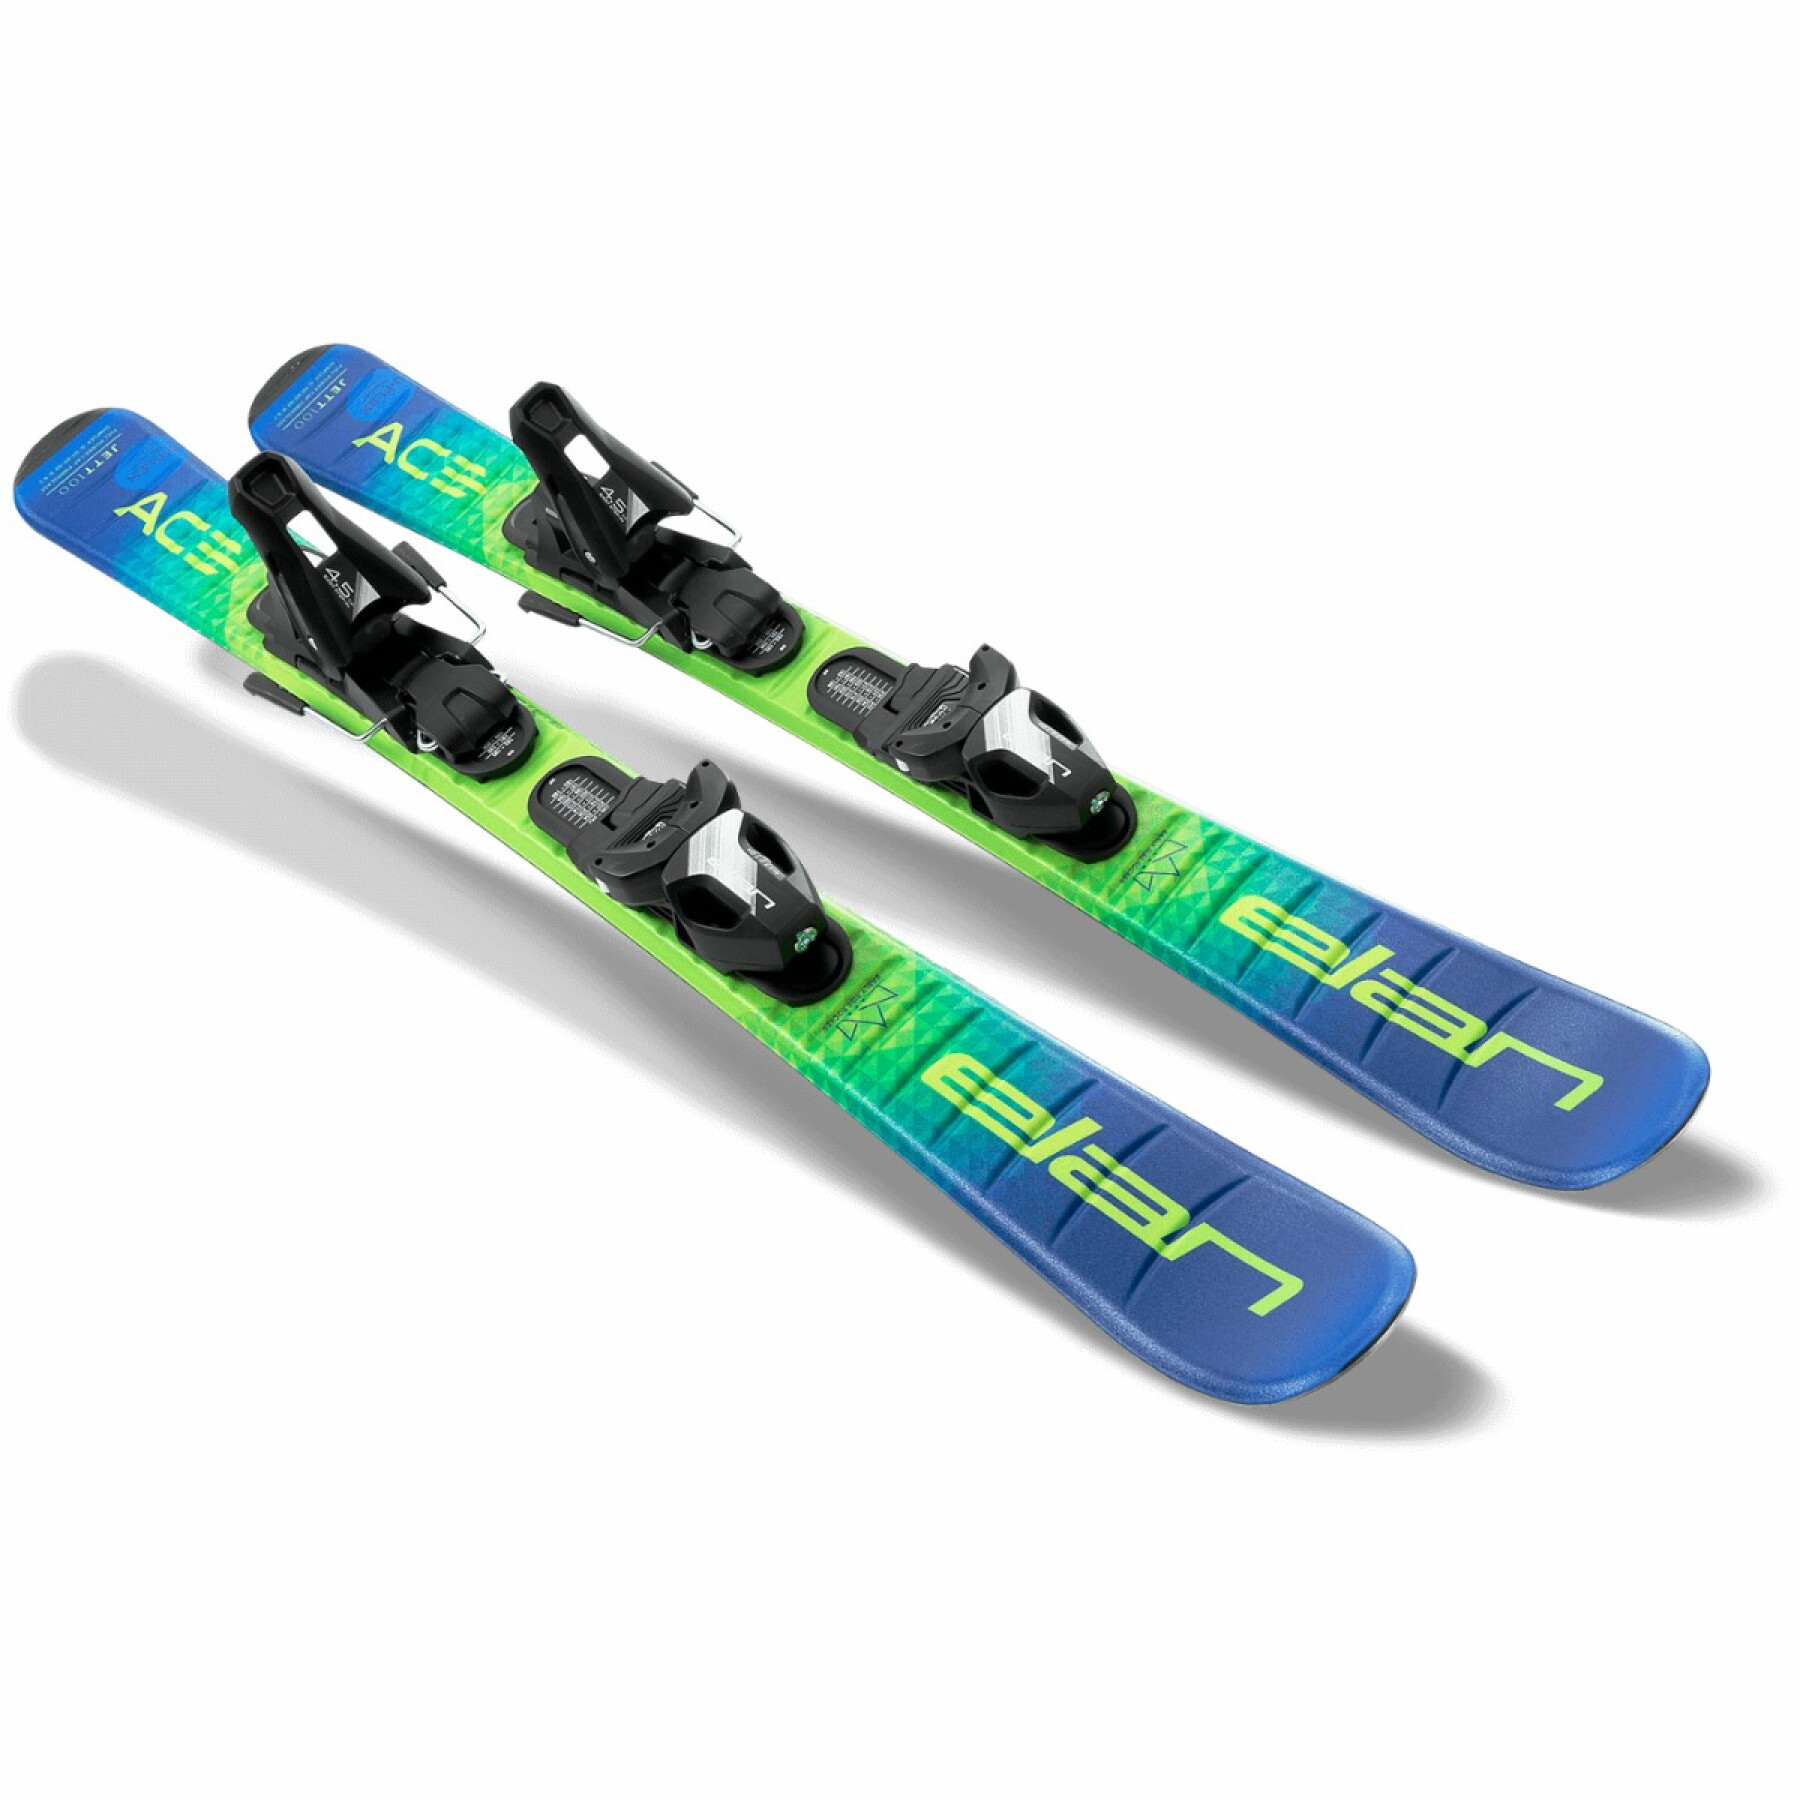 Jett el 4.5 ski pack with children's bindings Elan